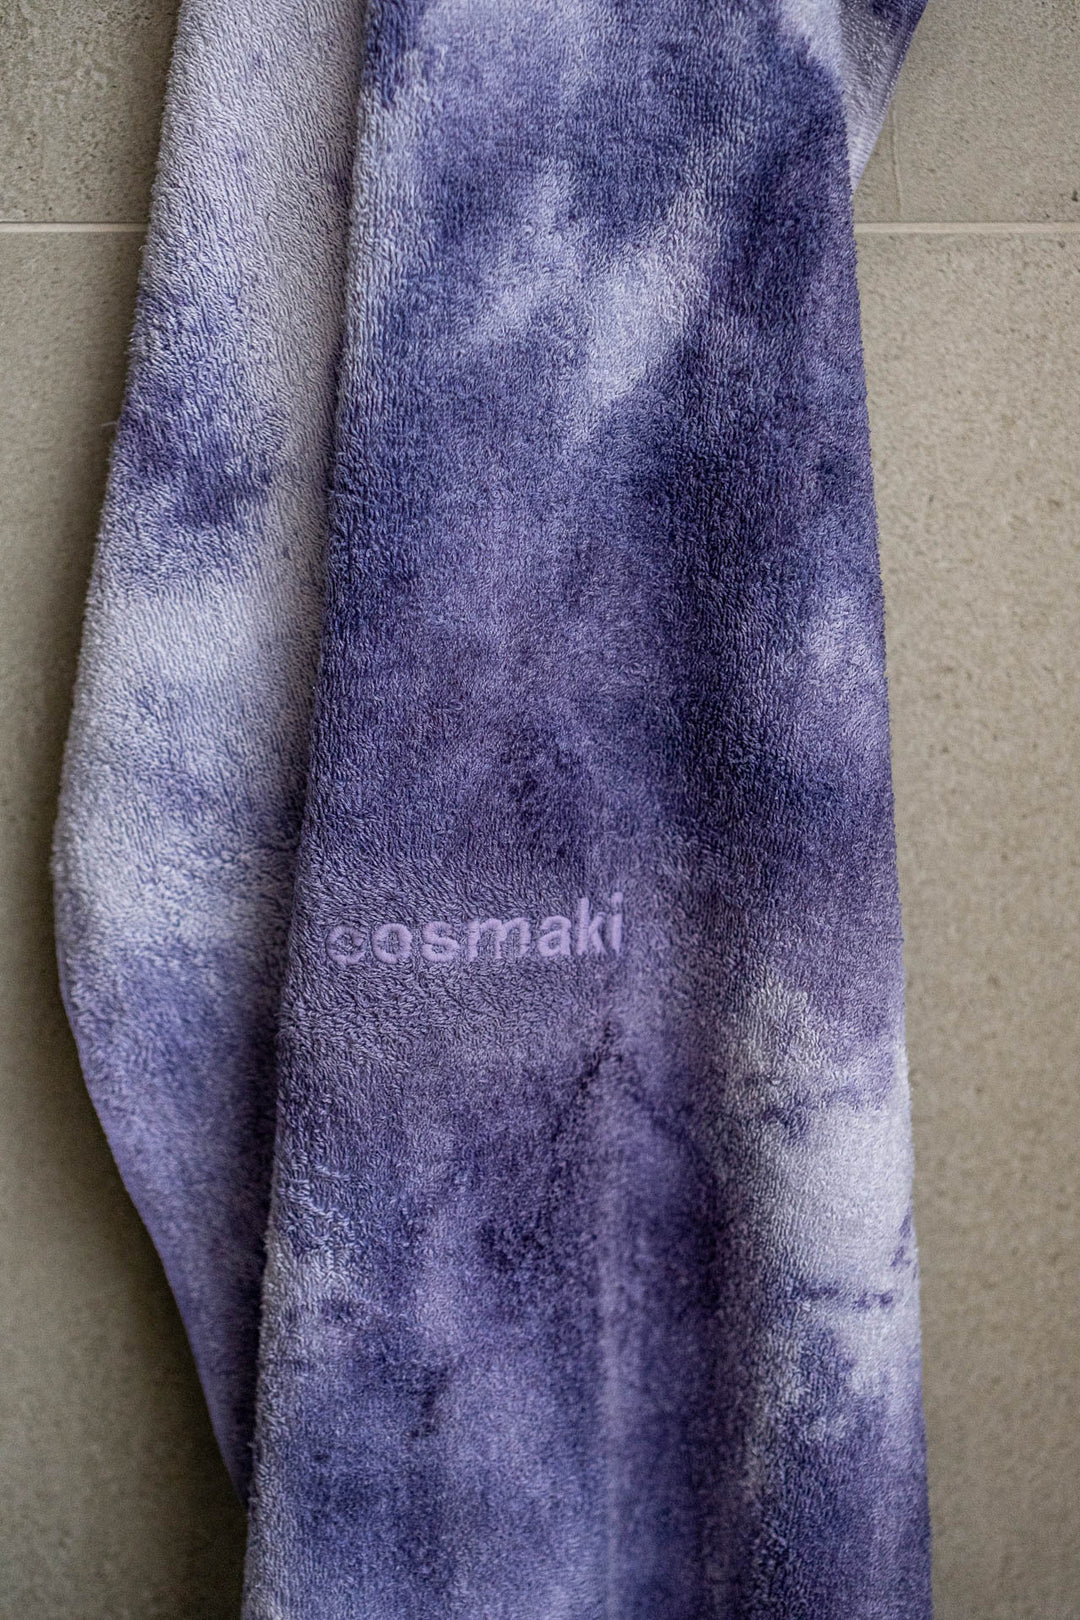 Bath Towel - Hand Dyed - Lavender Clouds